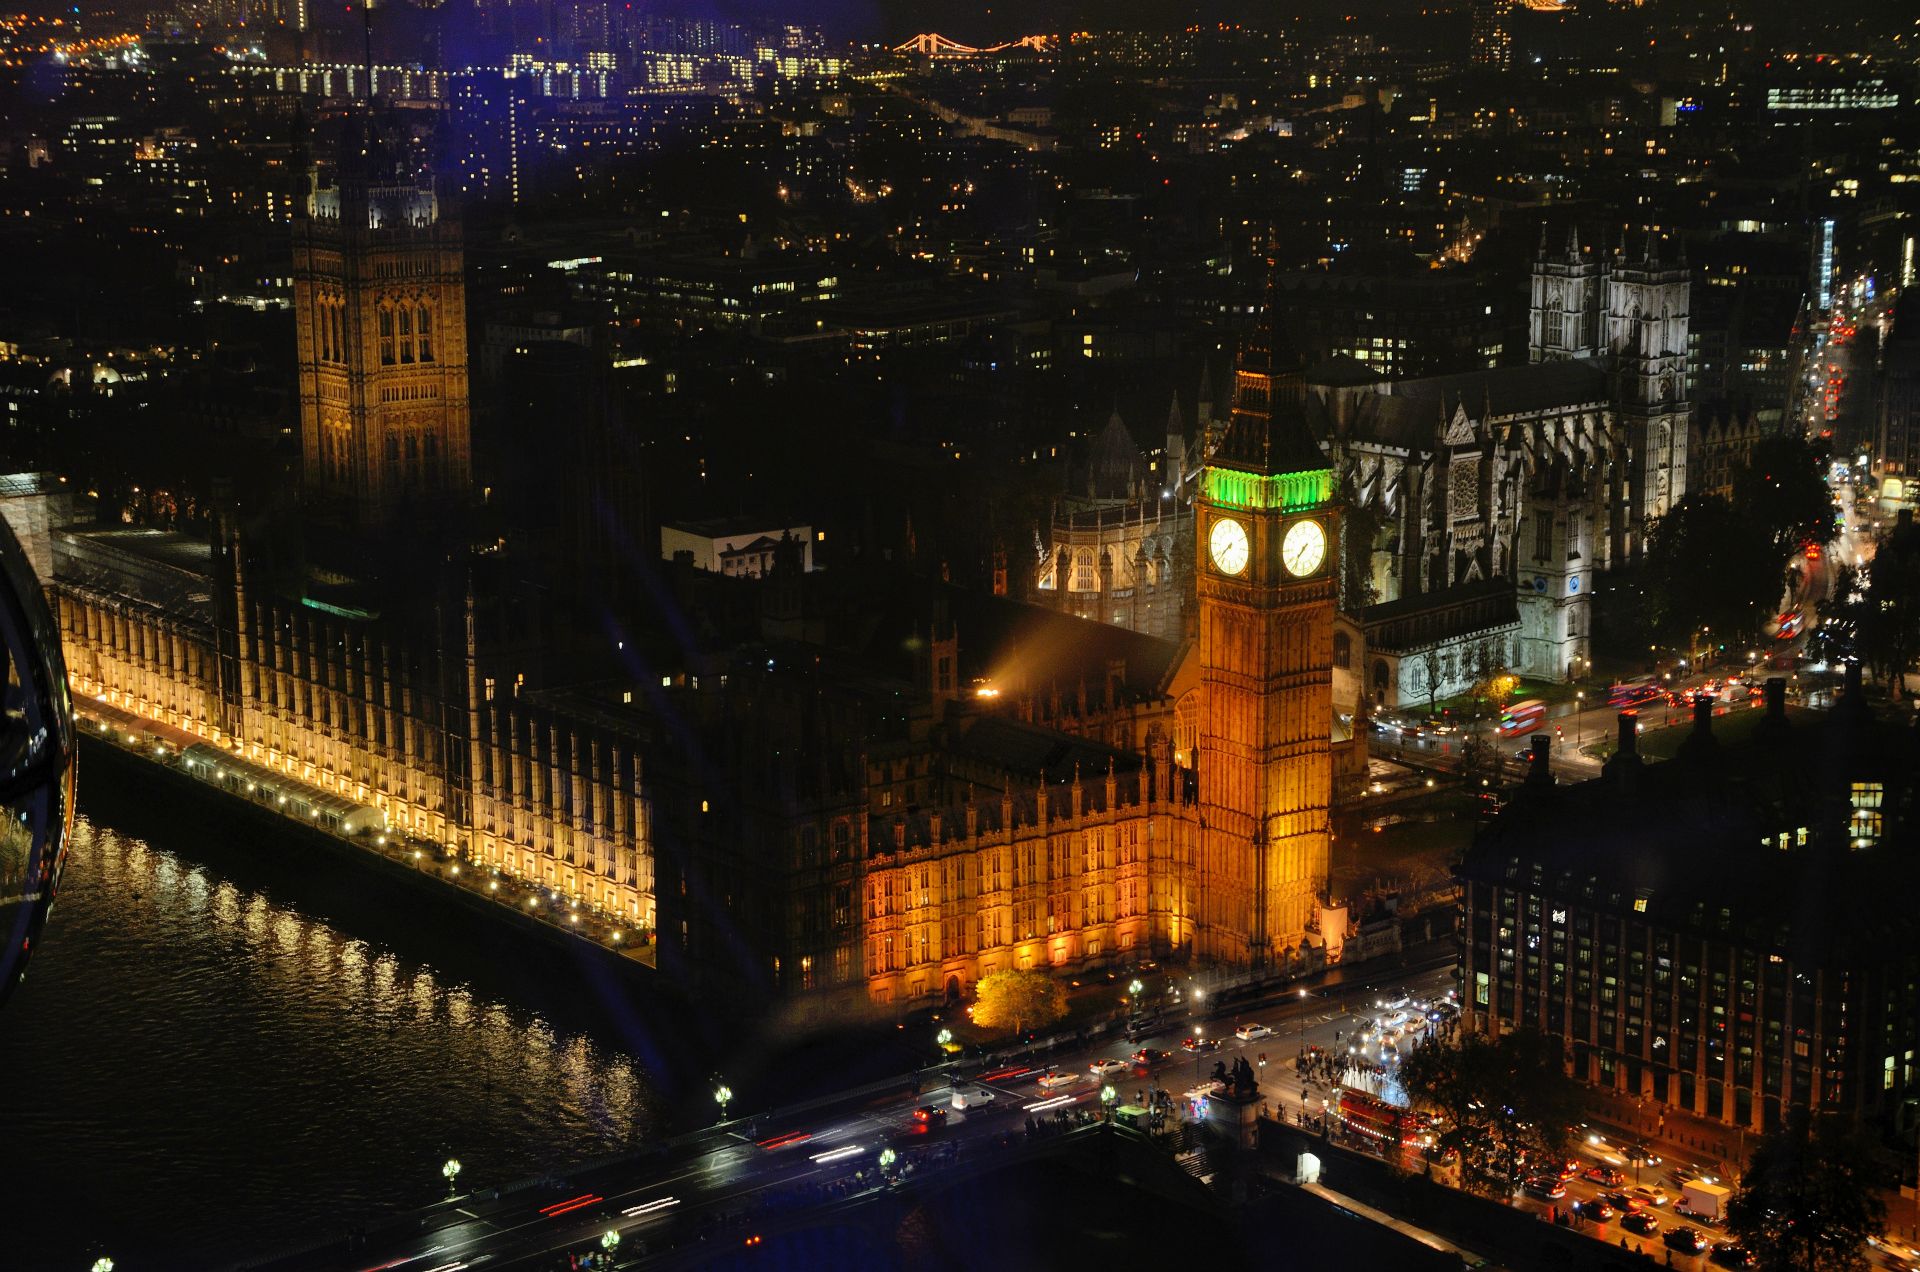 Houses of Parliament mit Big Ben, links dahinter die Westminster Abbey...